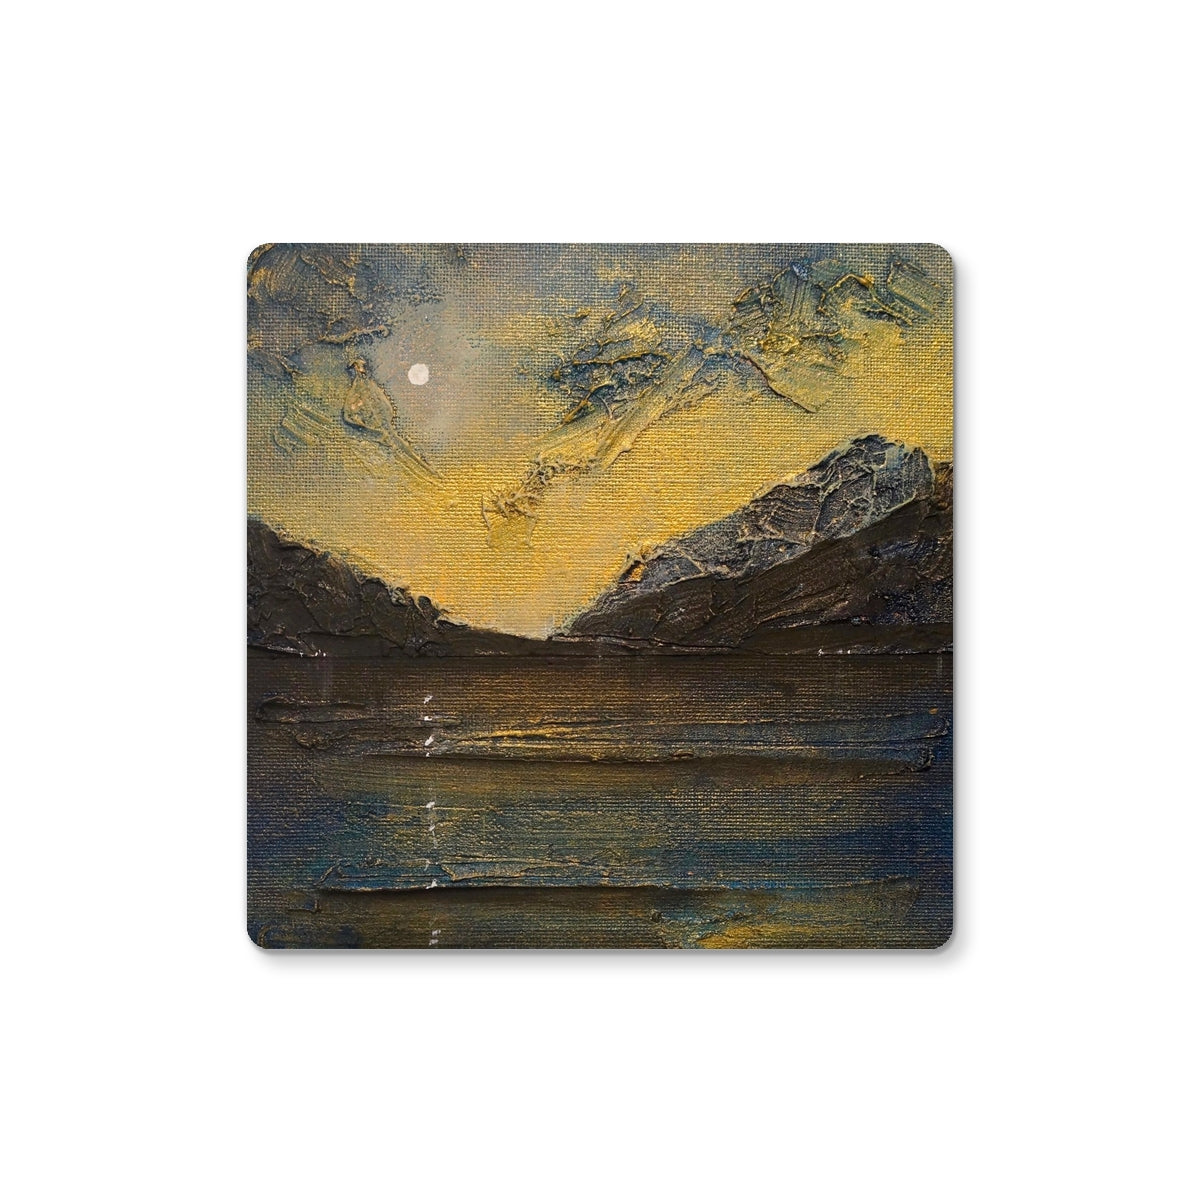 Loch Lomond Moonlight Art Gifts Coaster-Homeware-Scottish Lochs & Mountains Art Gallery-2 Coasters-Paintings, Prints, Homeware, Art Gifts From Scotland By Scottish Artist Kevin Hunter